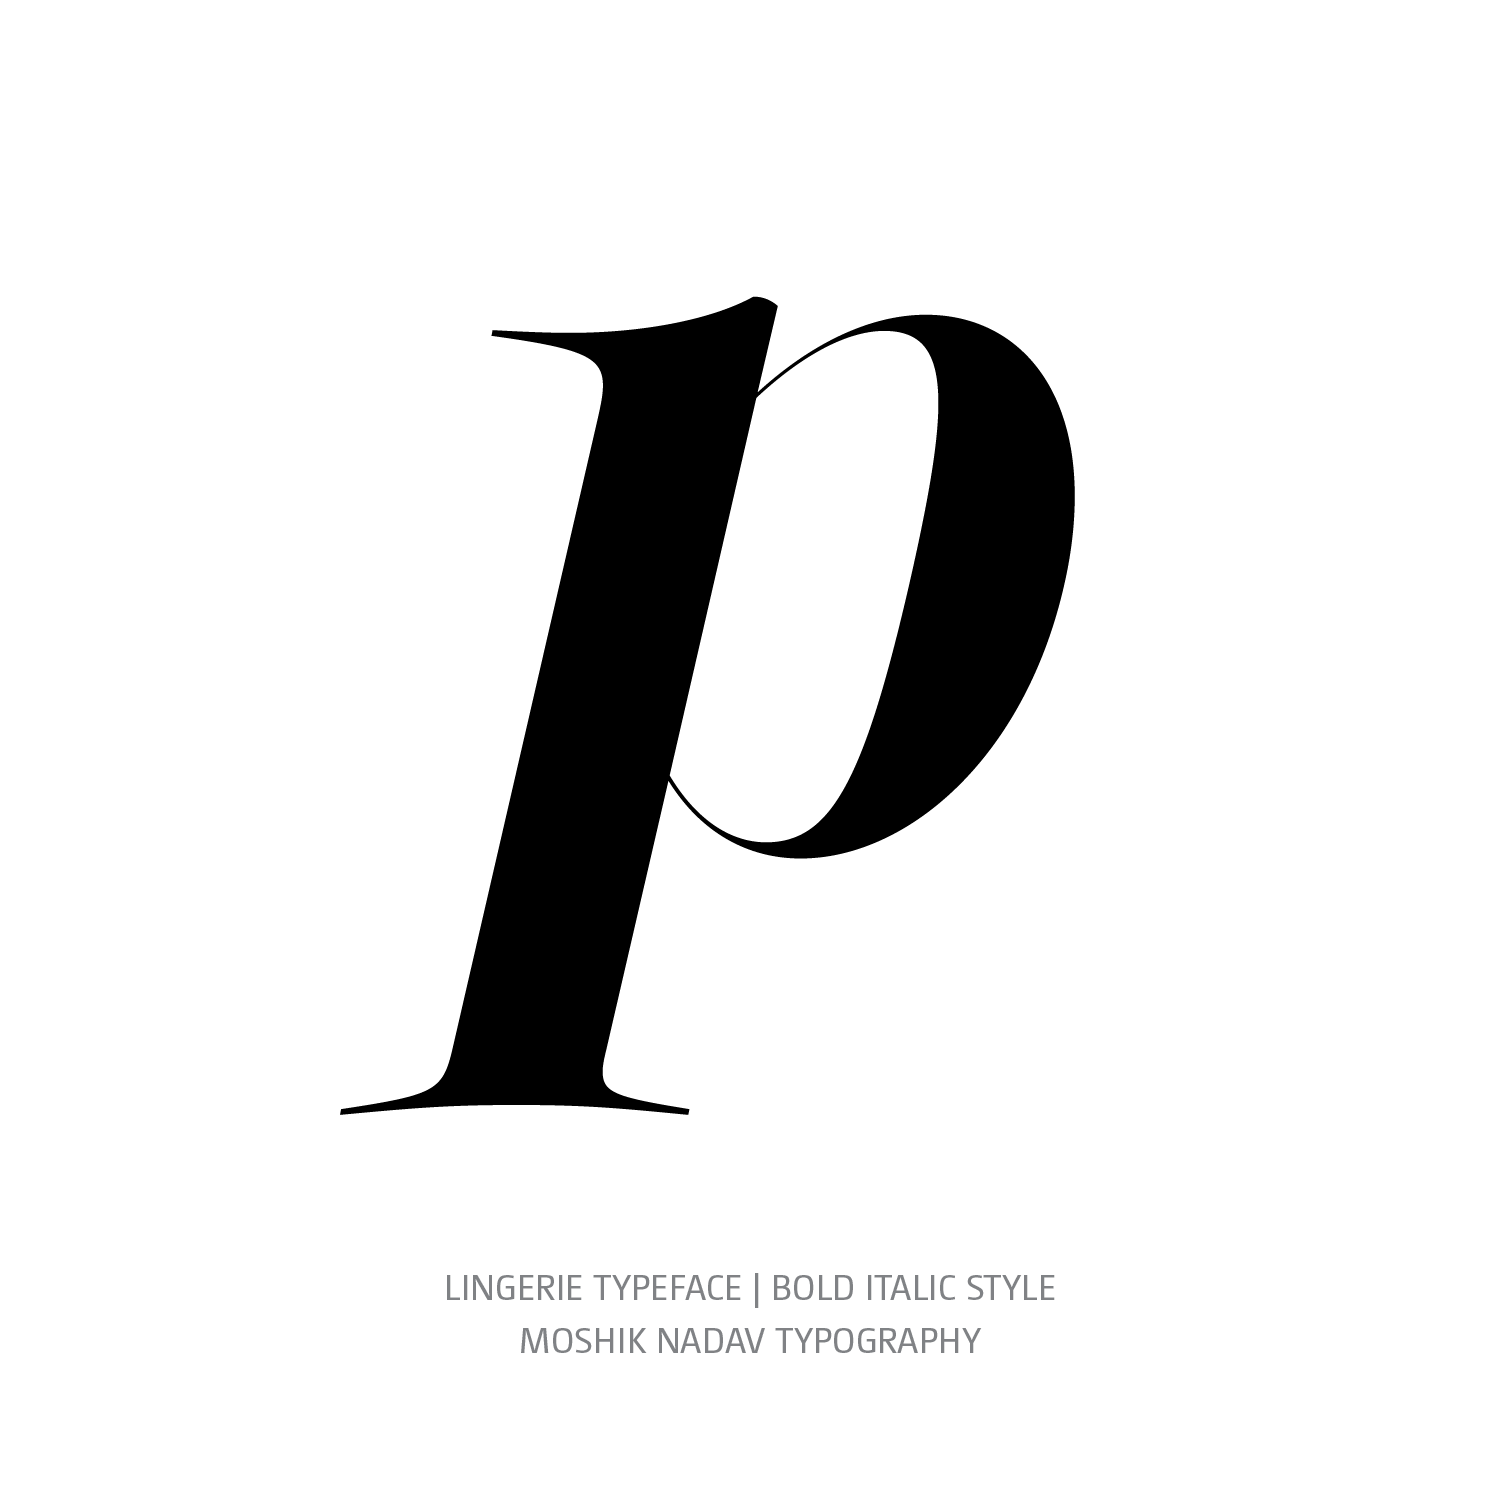 Lingerie Typeface Bold Italic p